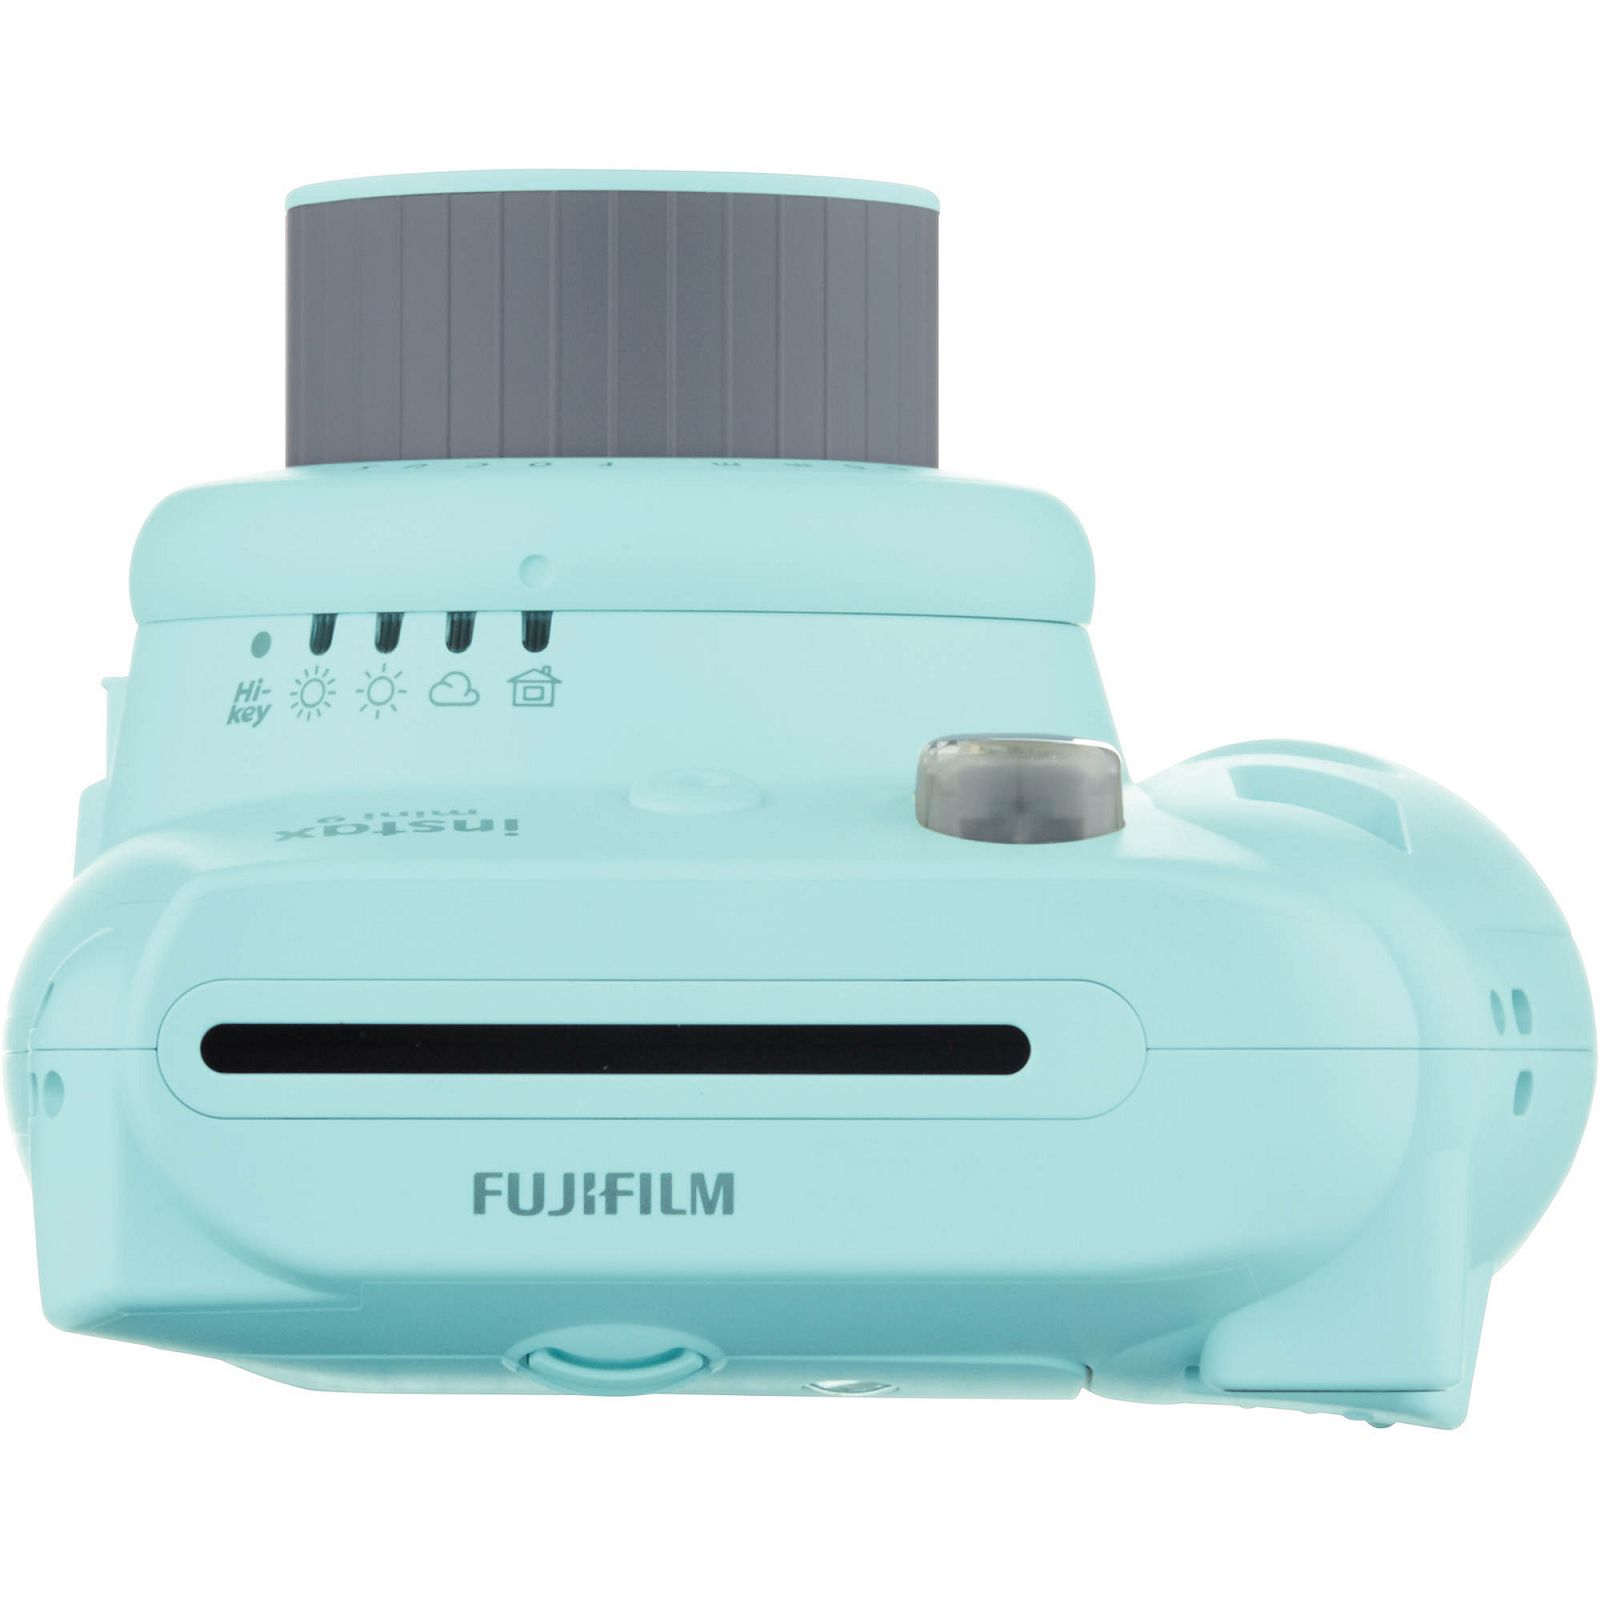 Fujifilm Instax Mini 9 Ice Blue svijetlo plavi polaroid Fuji fotoaparat s trenutnim ispisom fotografije + Fujinon 60mm f/12.7 objektiv